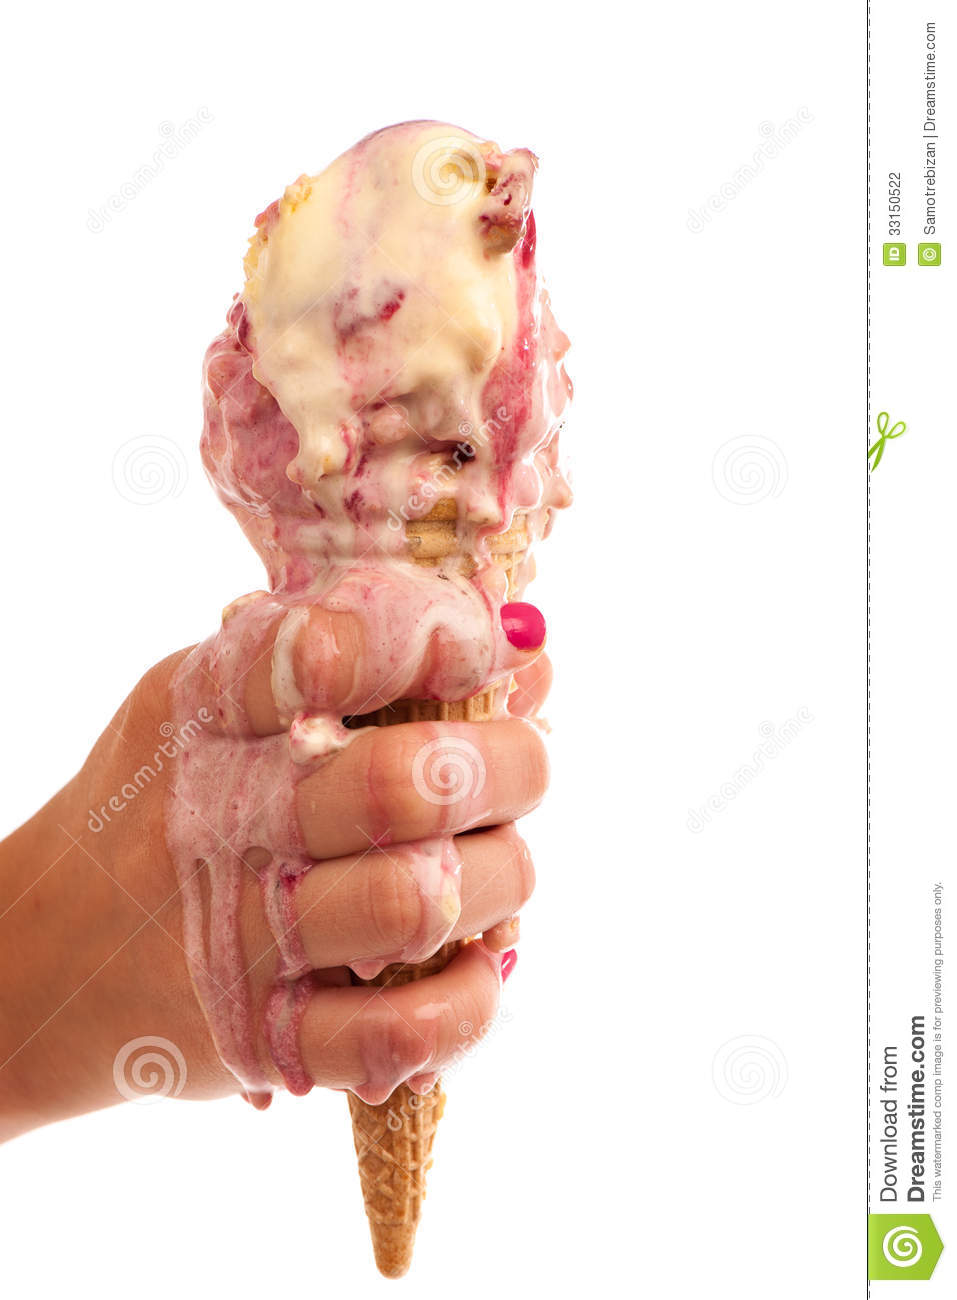 ice cream melting clipart - photo #46